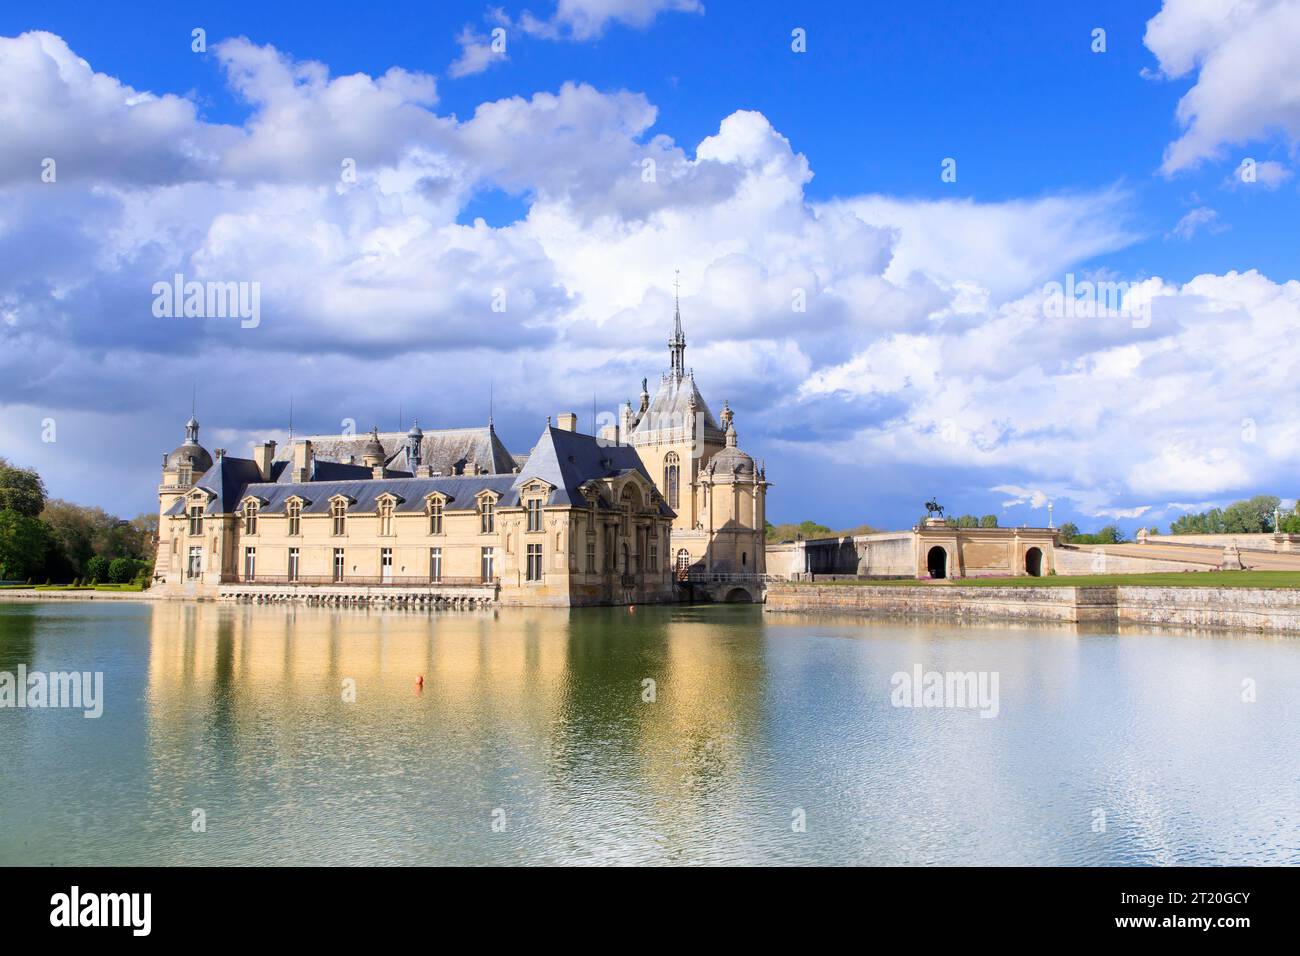 Chateau de Chantilly, castello registrato come National Historic Landmark (monumento storico francese) Foto Stock